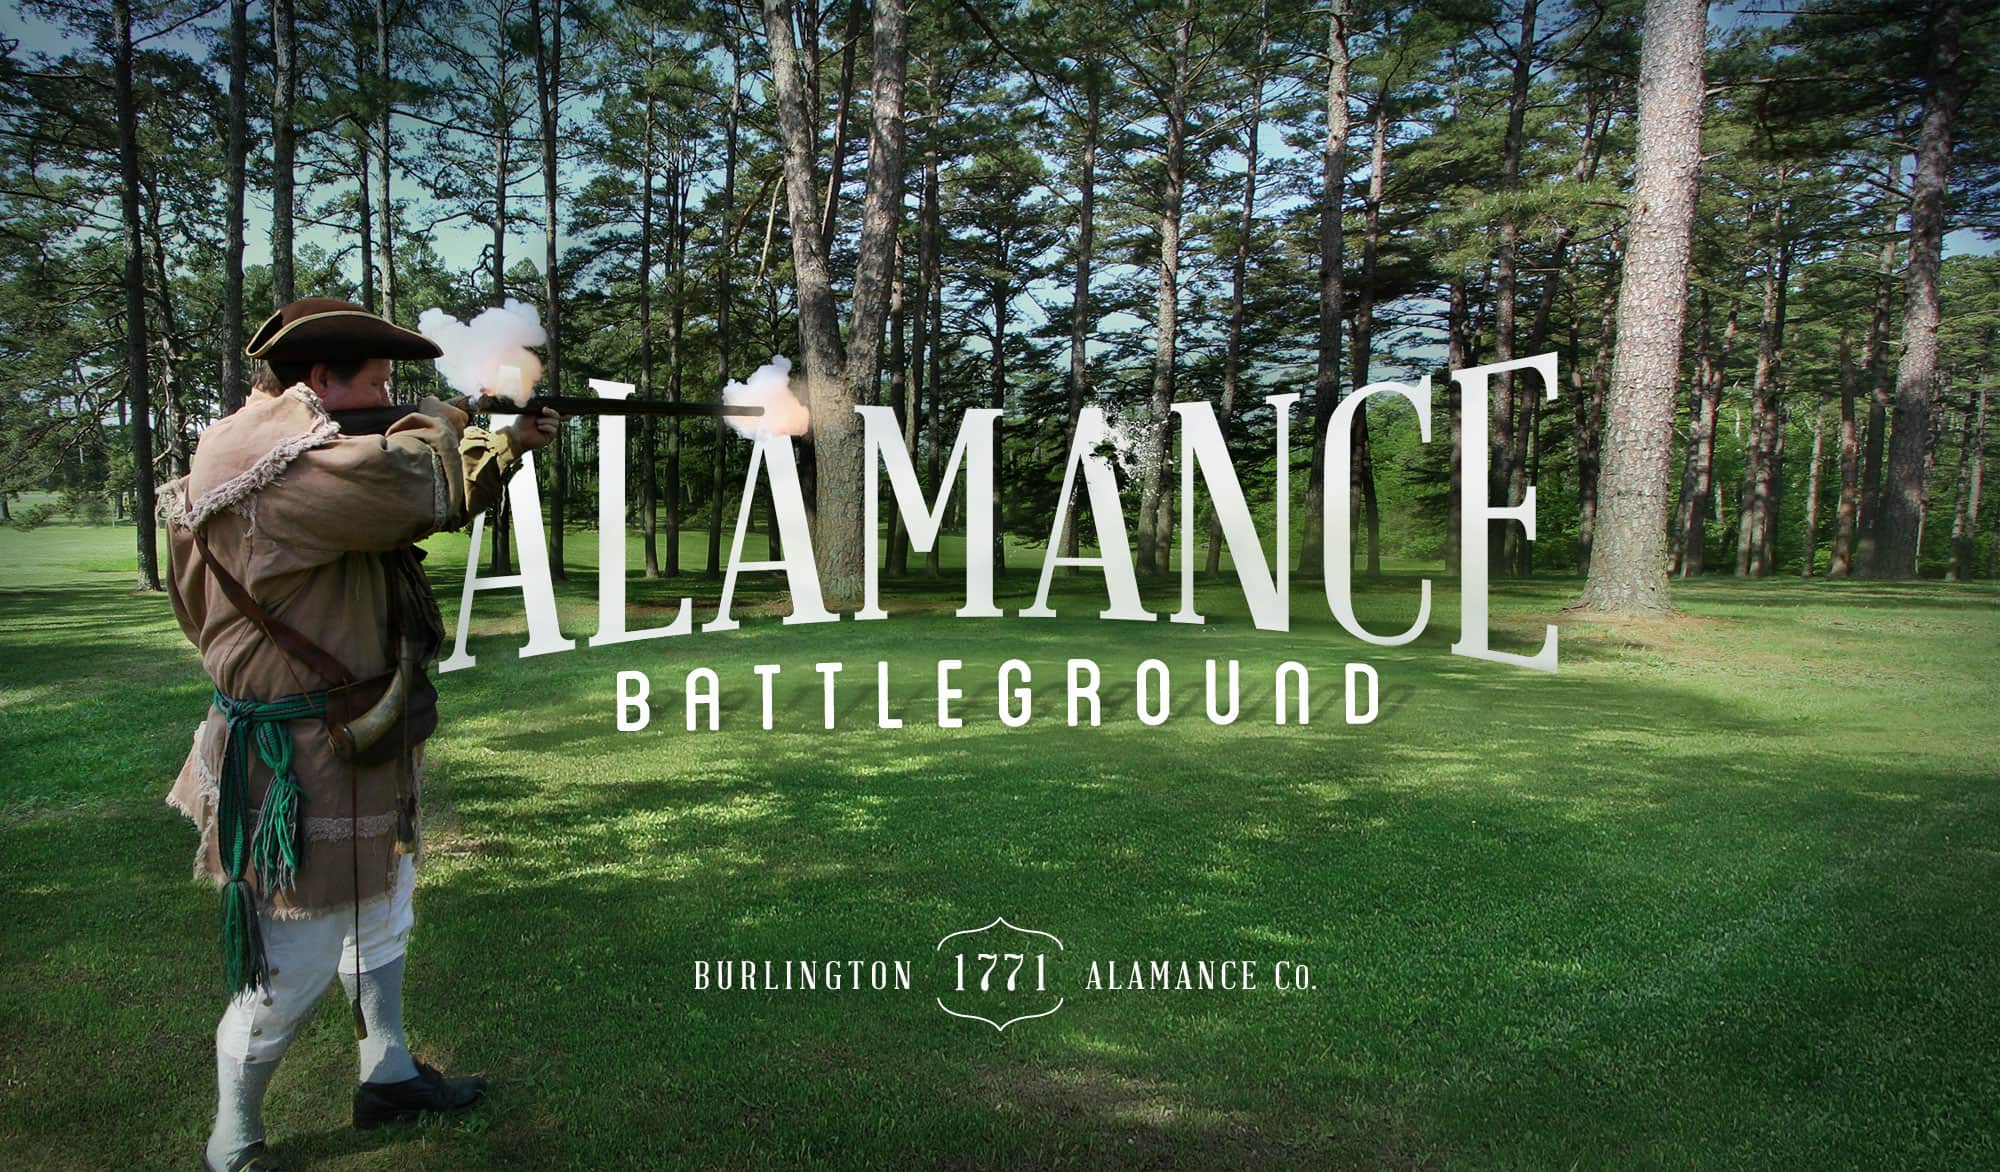 Alamance Battleground